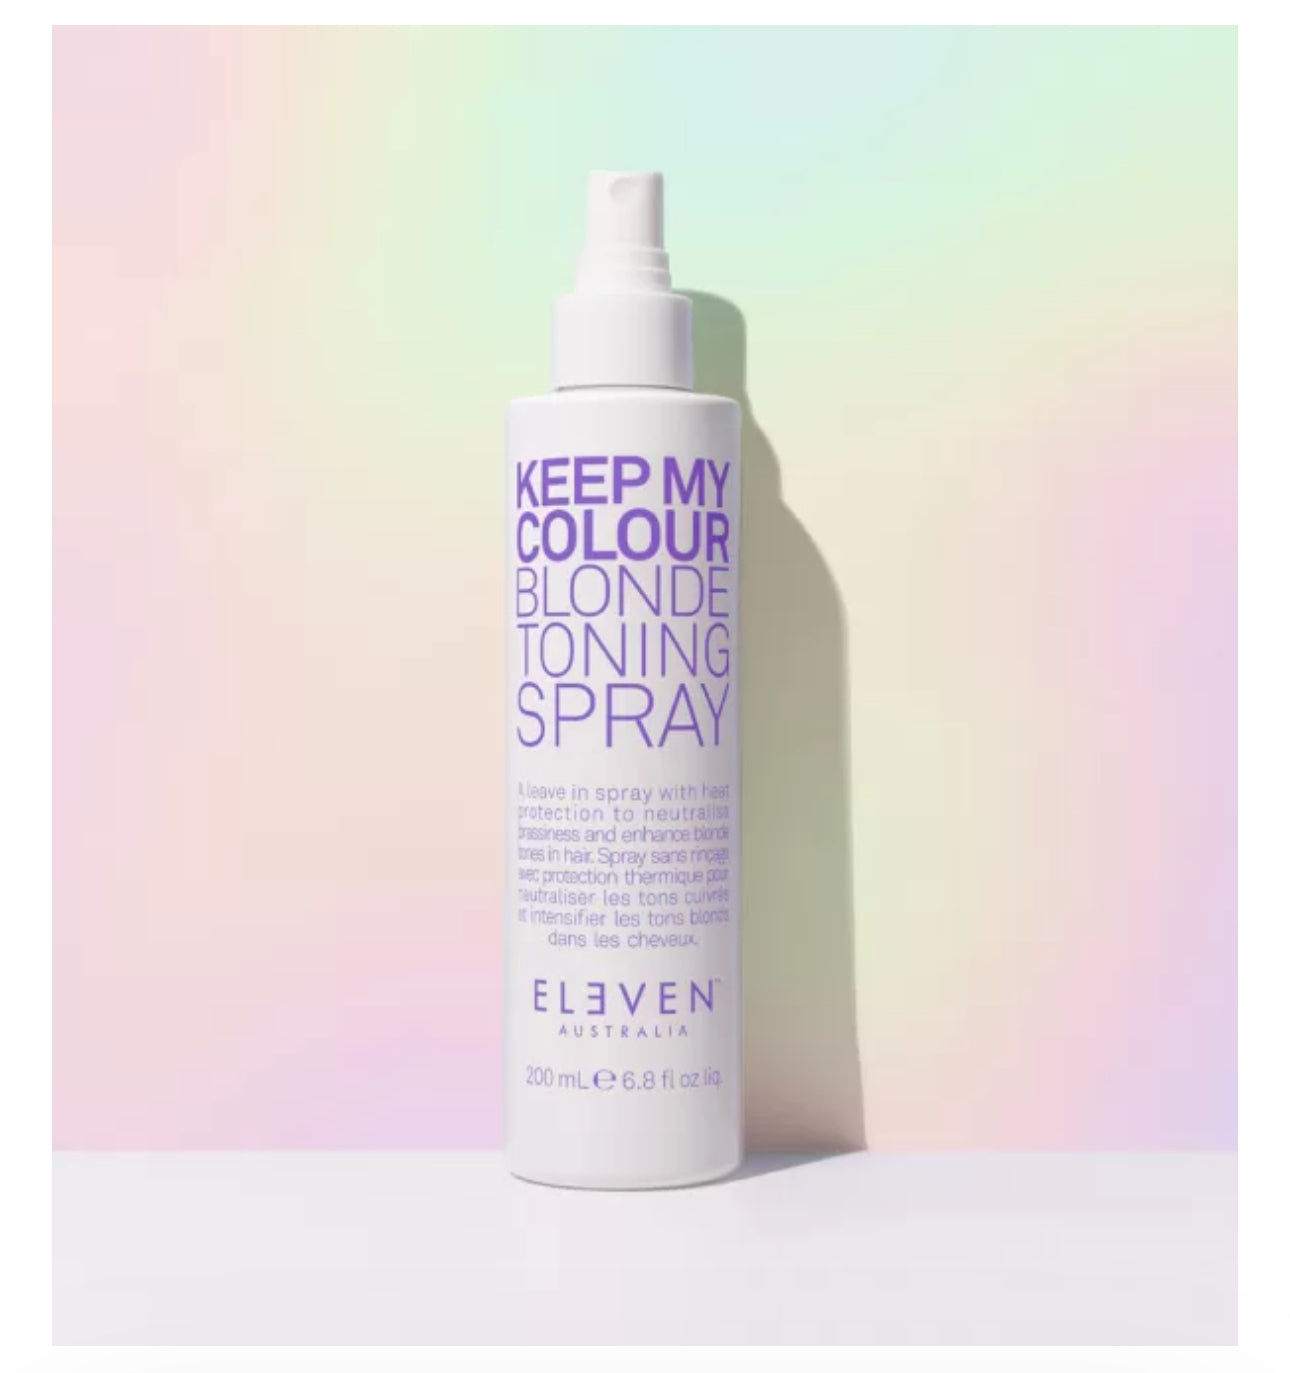 Eleven Australia keep my colour blonde toning spray